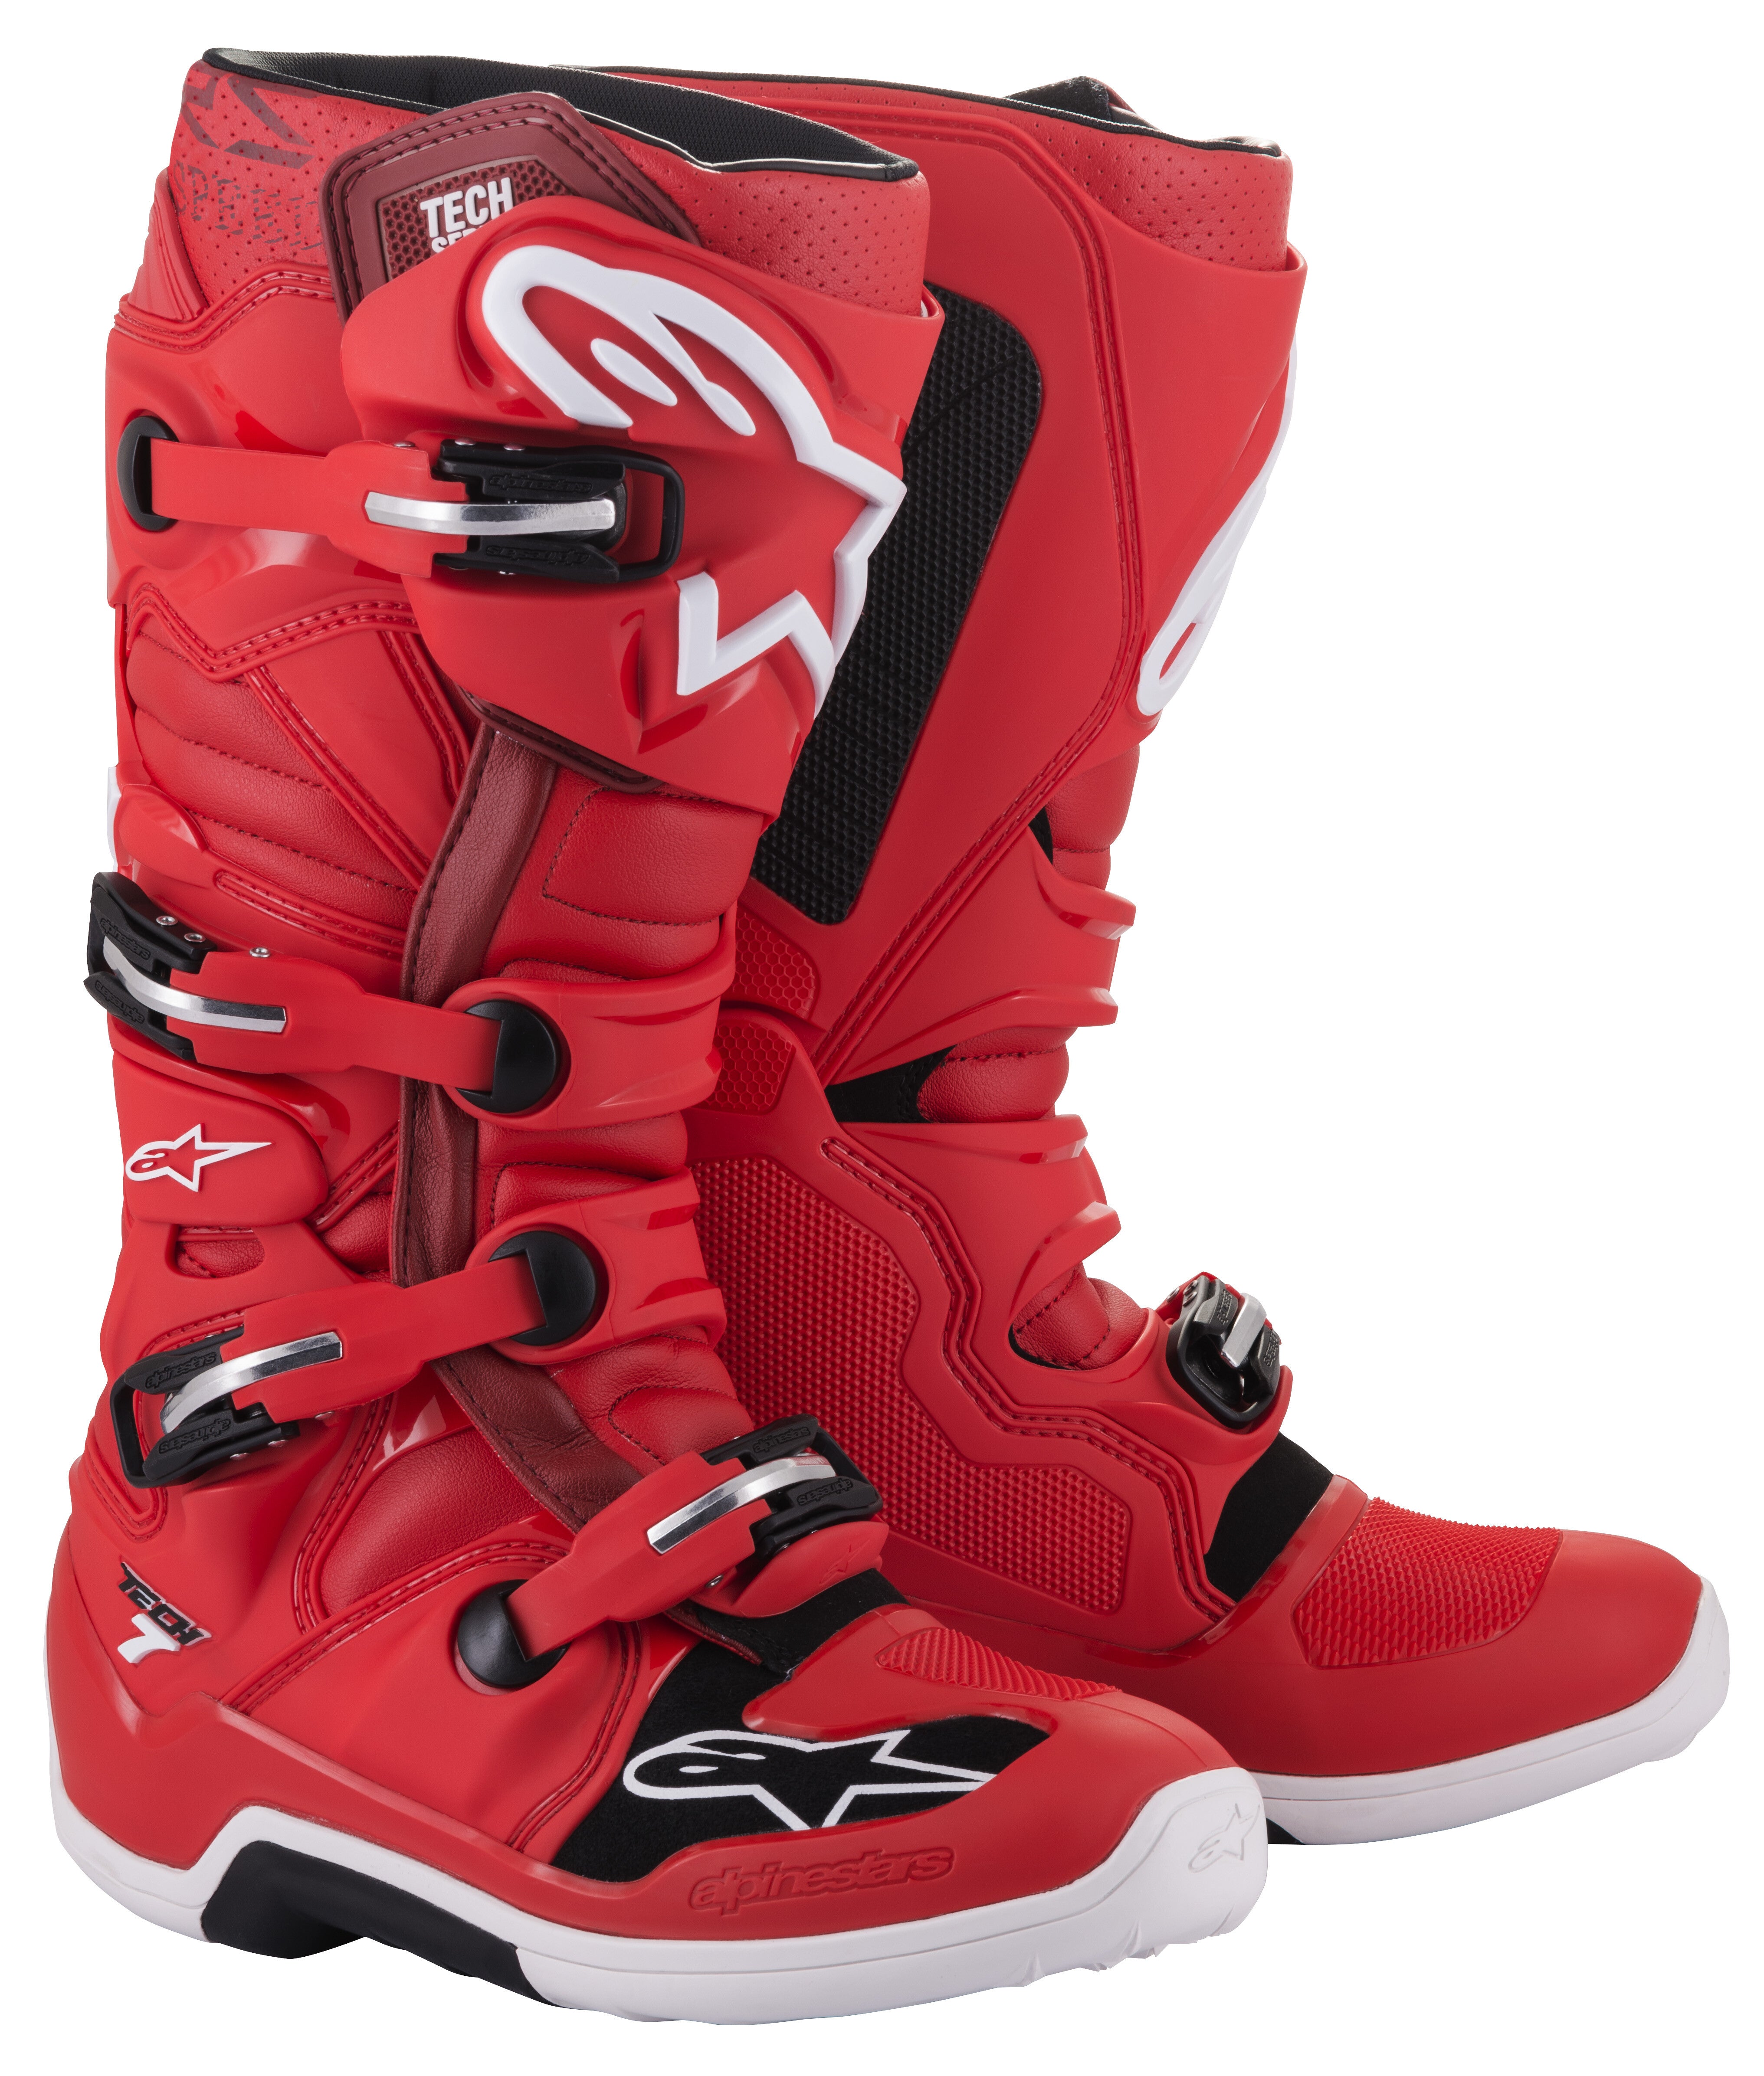 Alpinestars Tech 7 Mx Boots Red Us 15 2012014-30-15